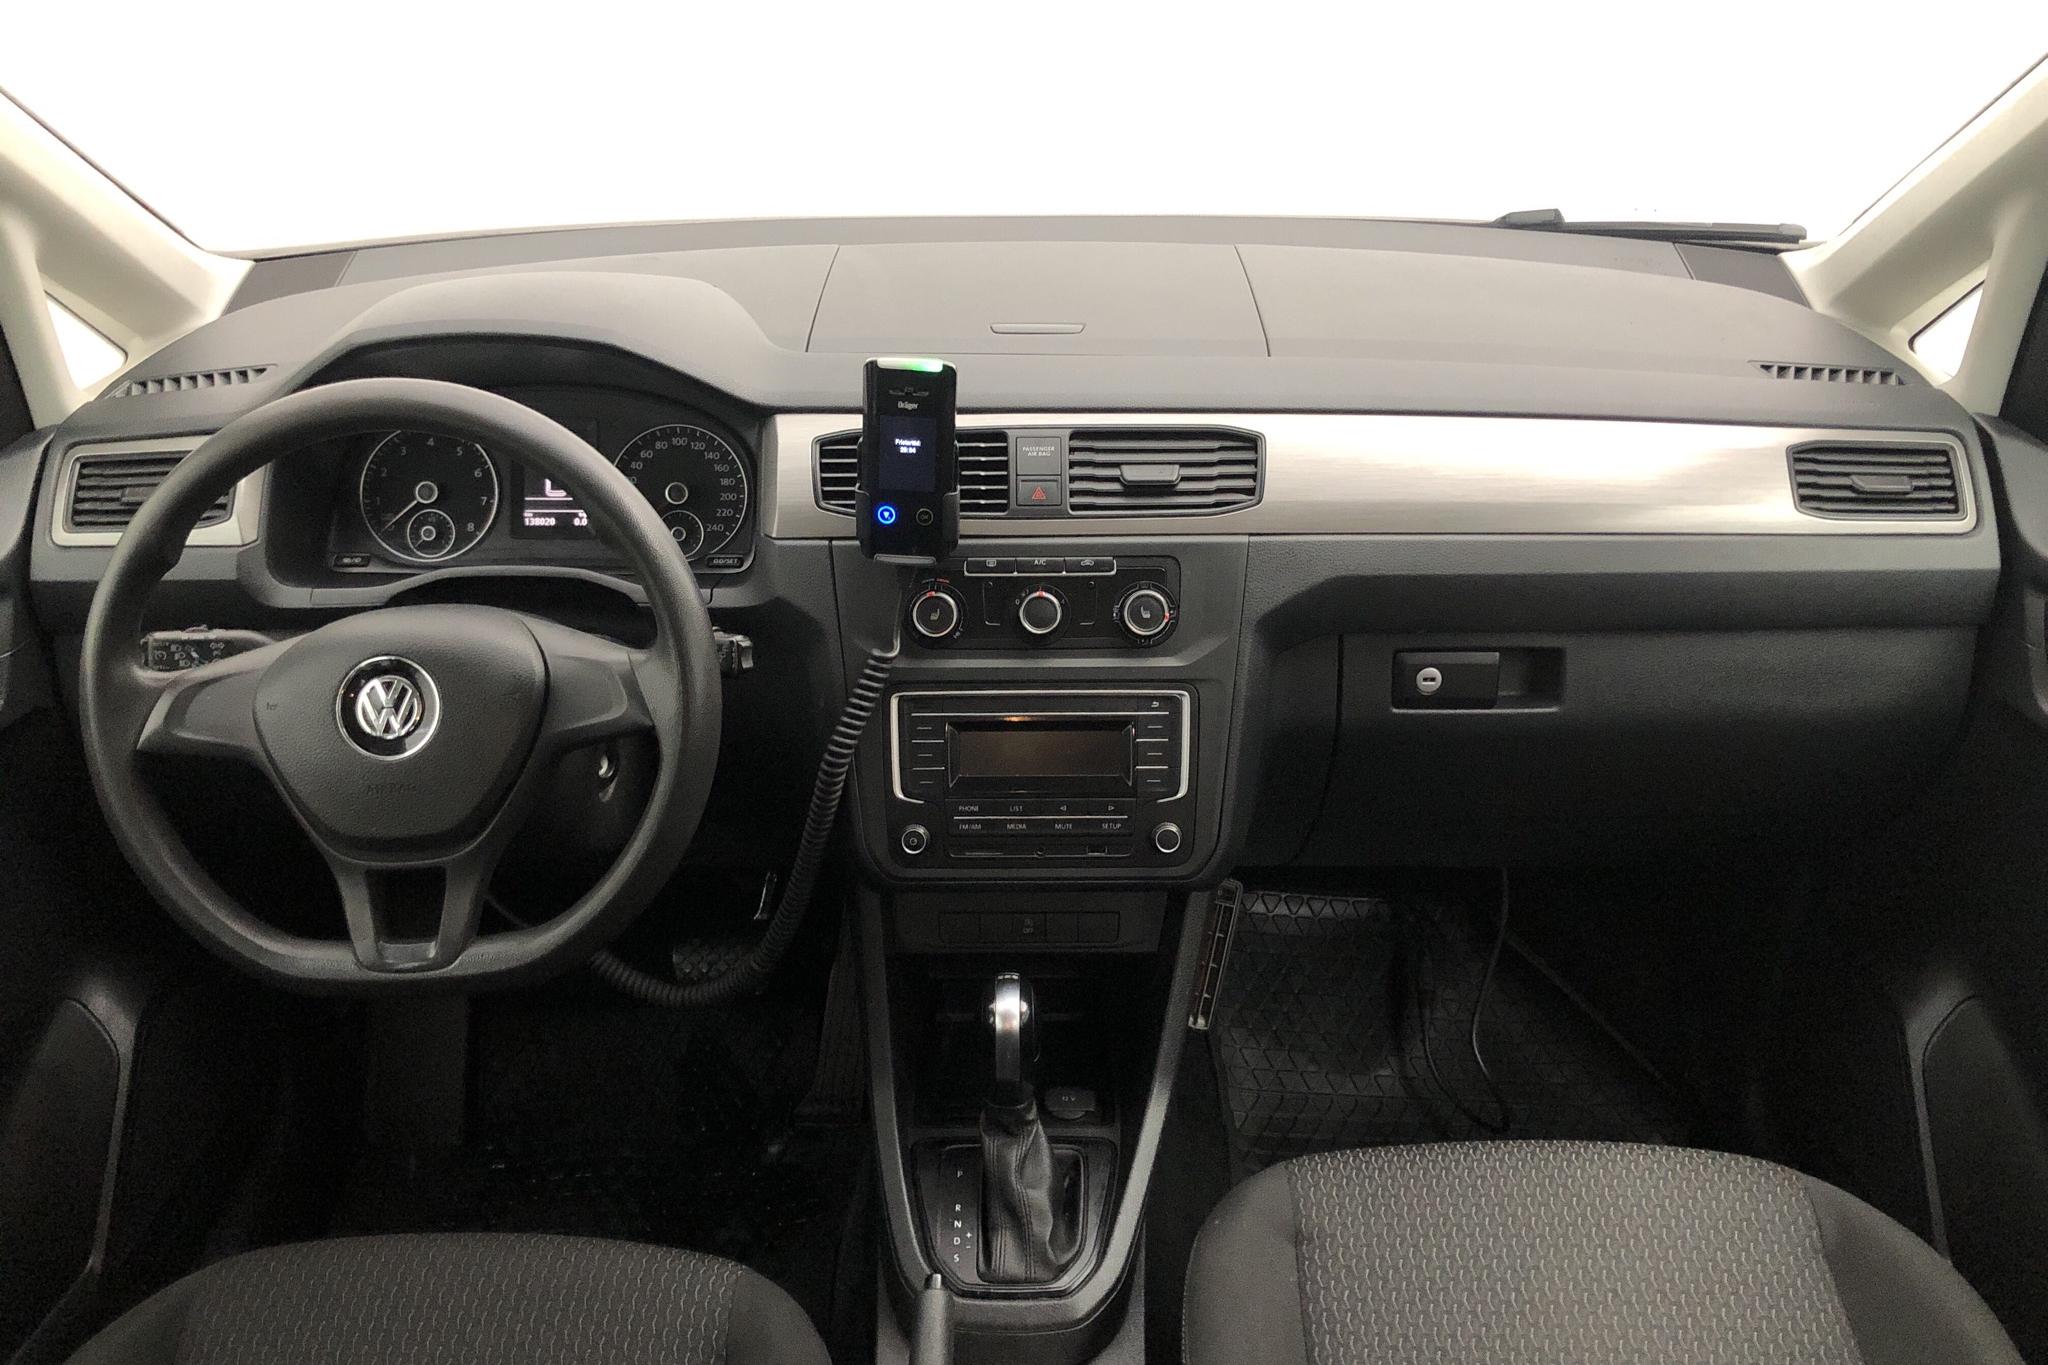 VW Caddy MPV Maxi 1.4 TGI (110hk) - 138 020 km - Automatic - white - 2017